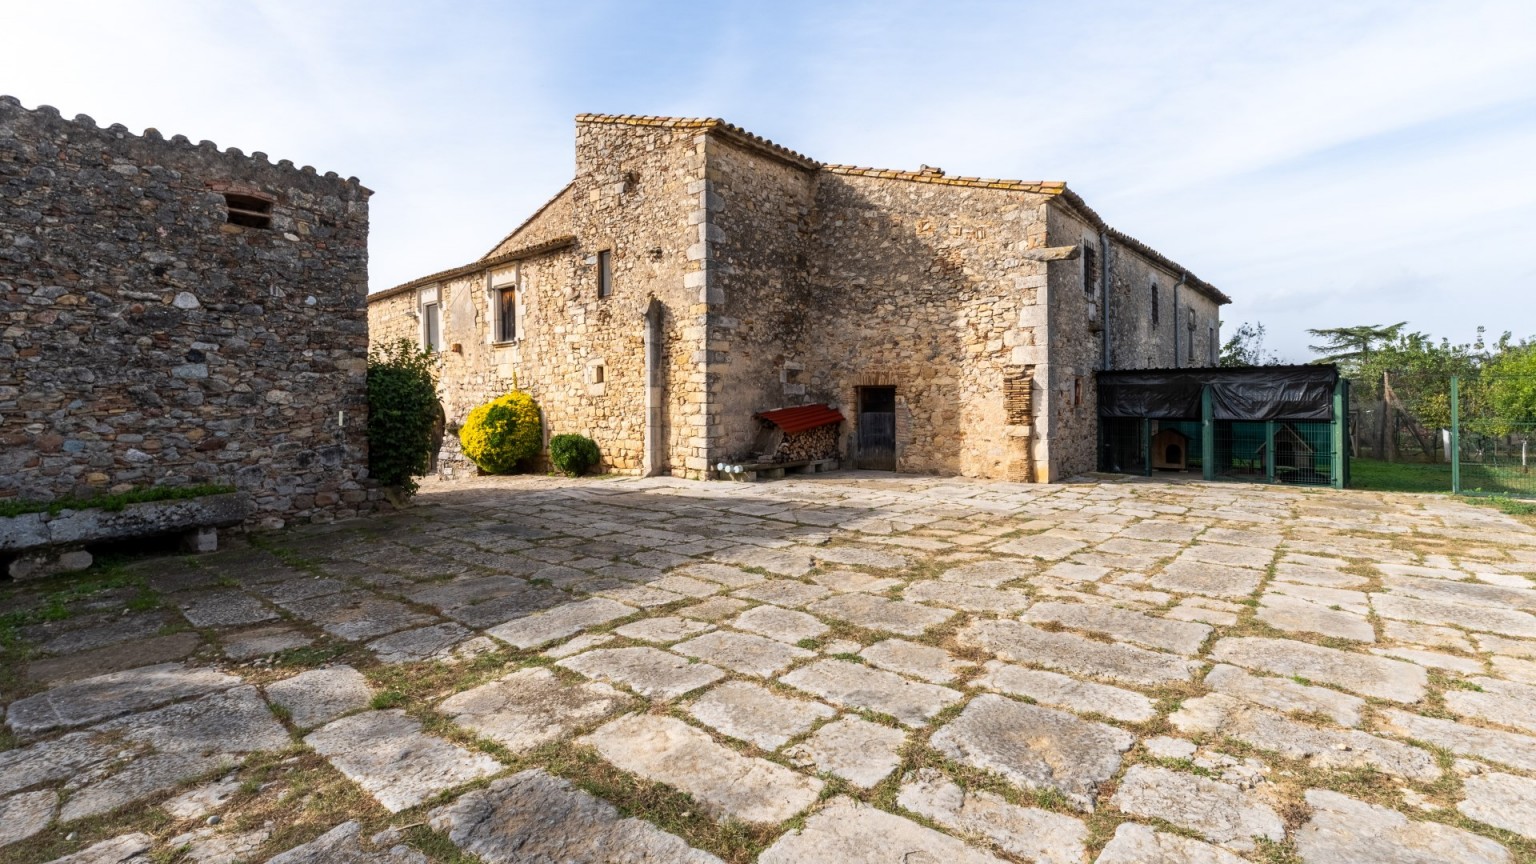 Grand Masia for sale, located in Mas Barril de Girona.